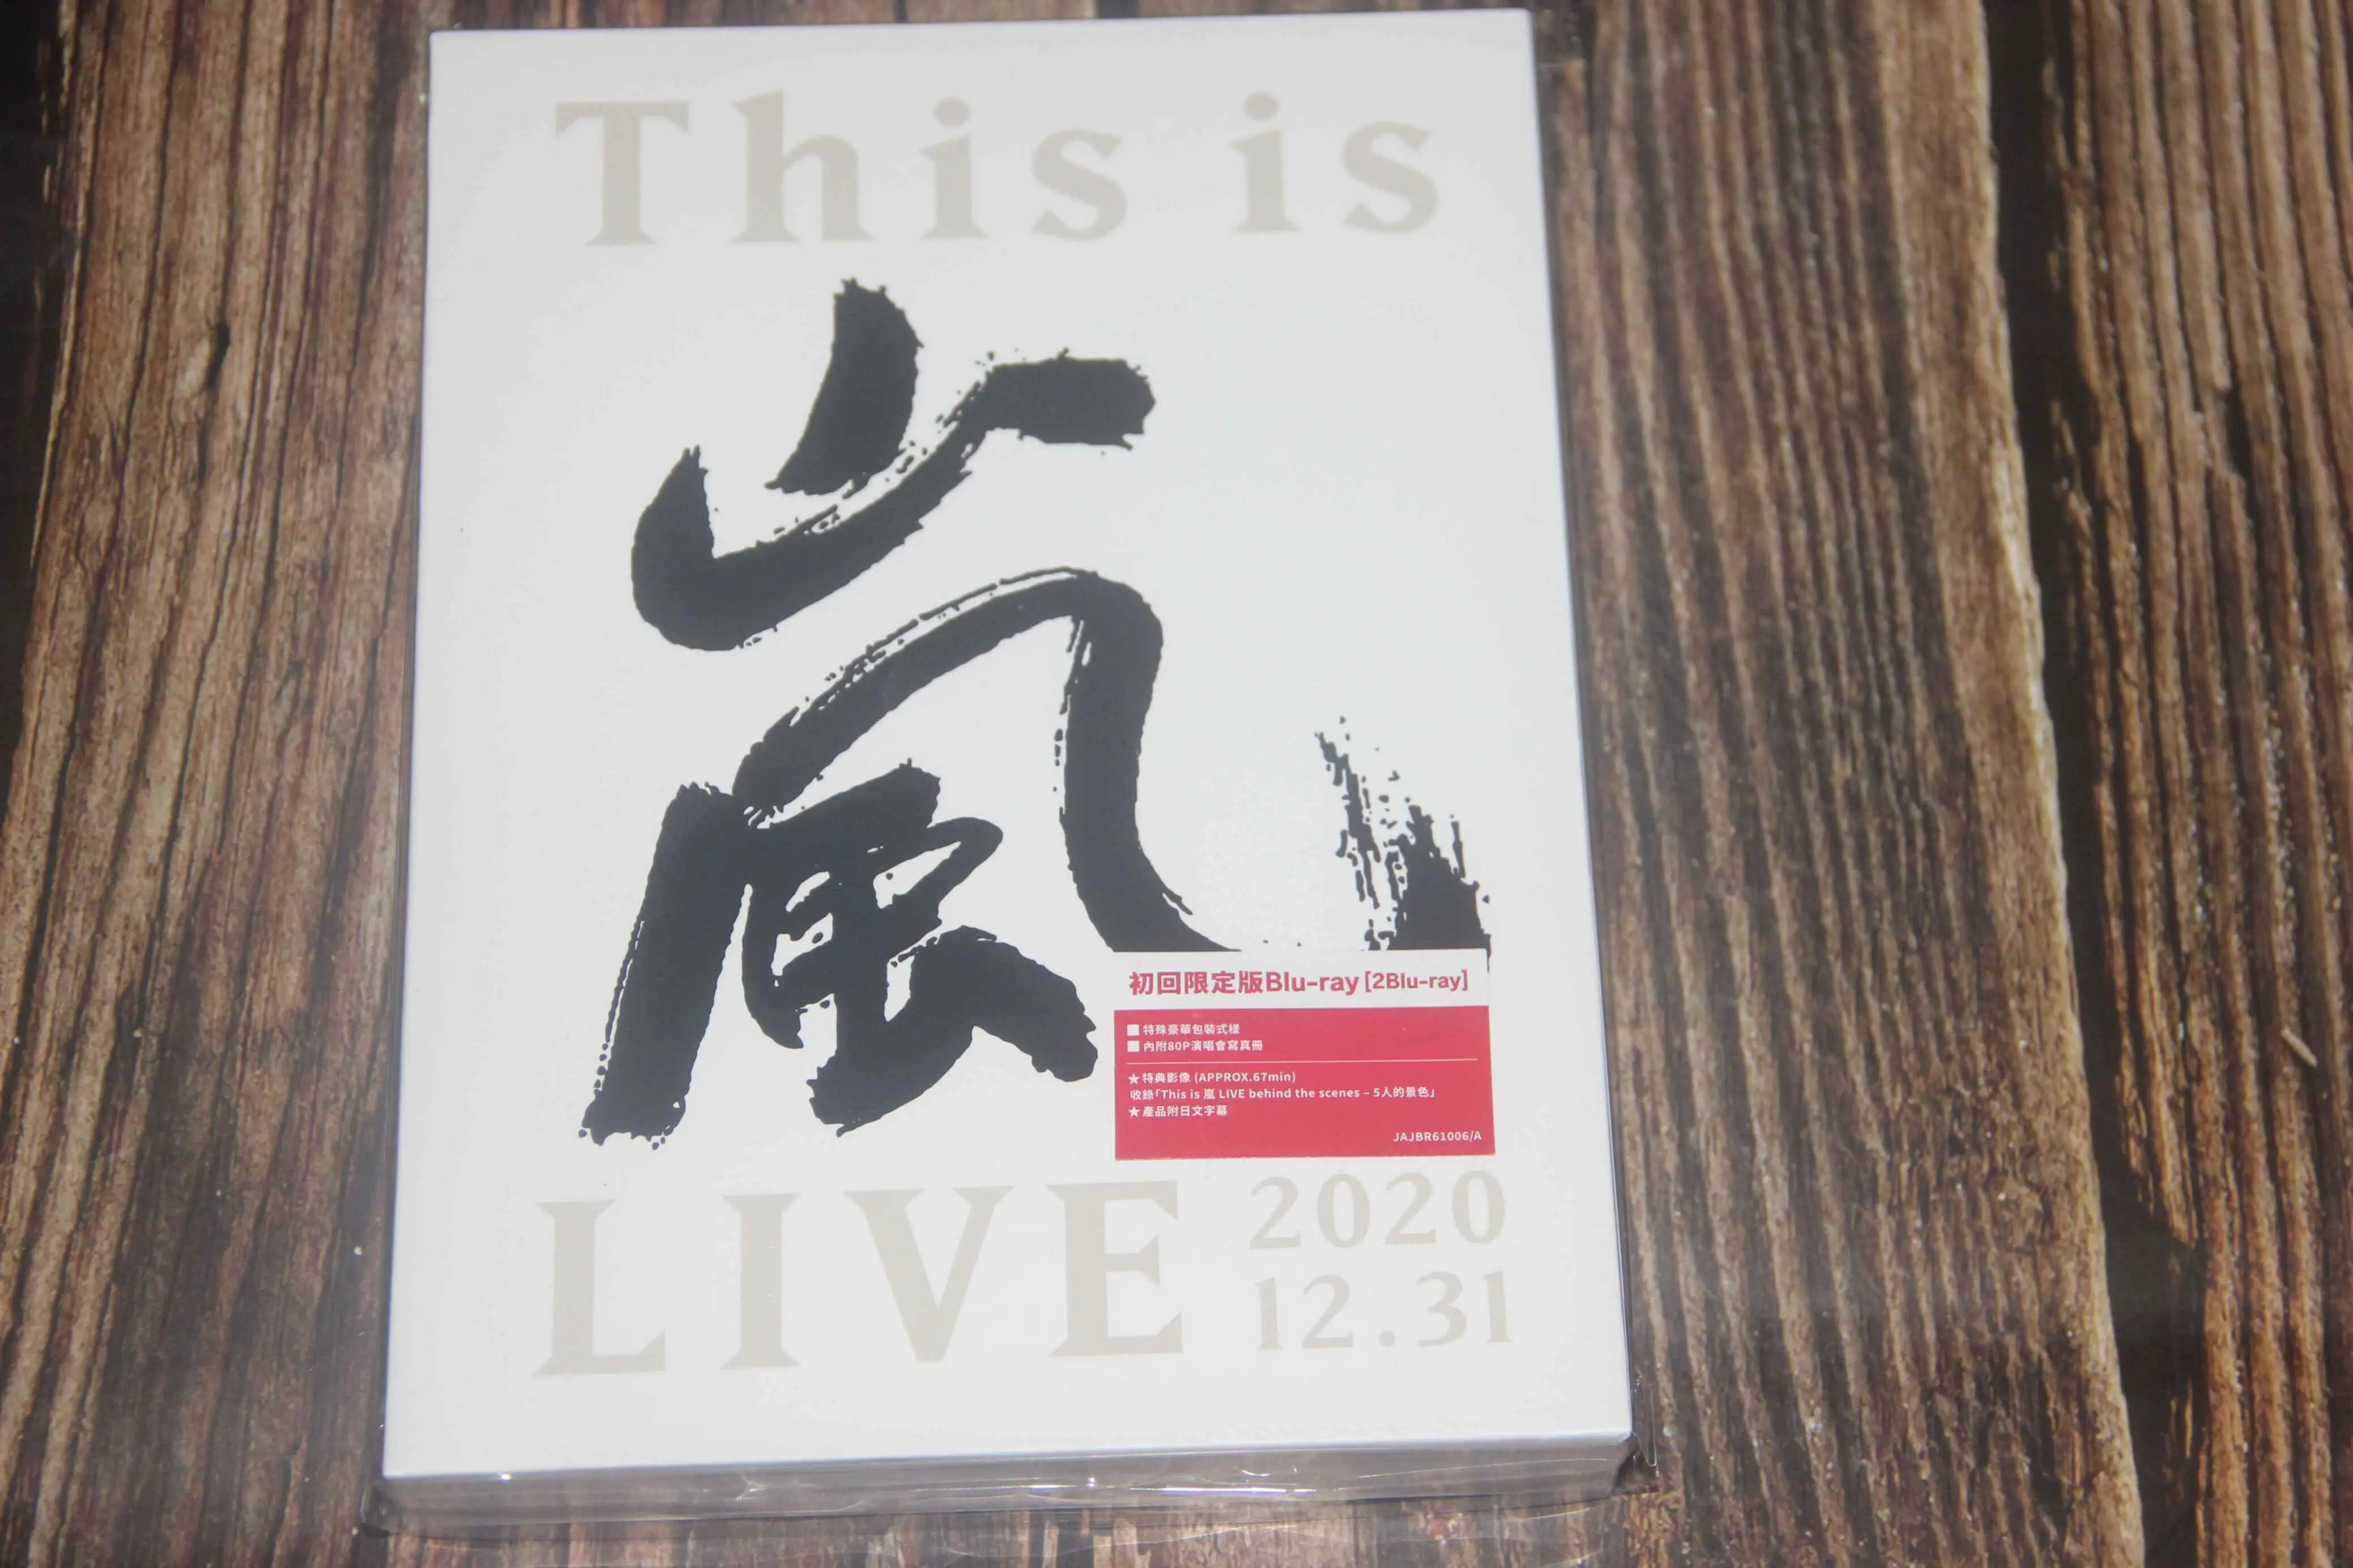 现货】ARASHI This is 岚LIVE 2020.12.31 初回限定版3DVD